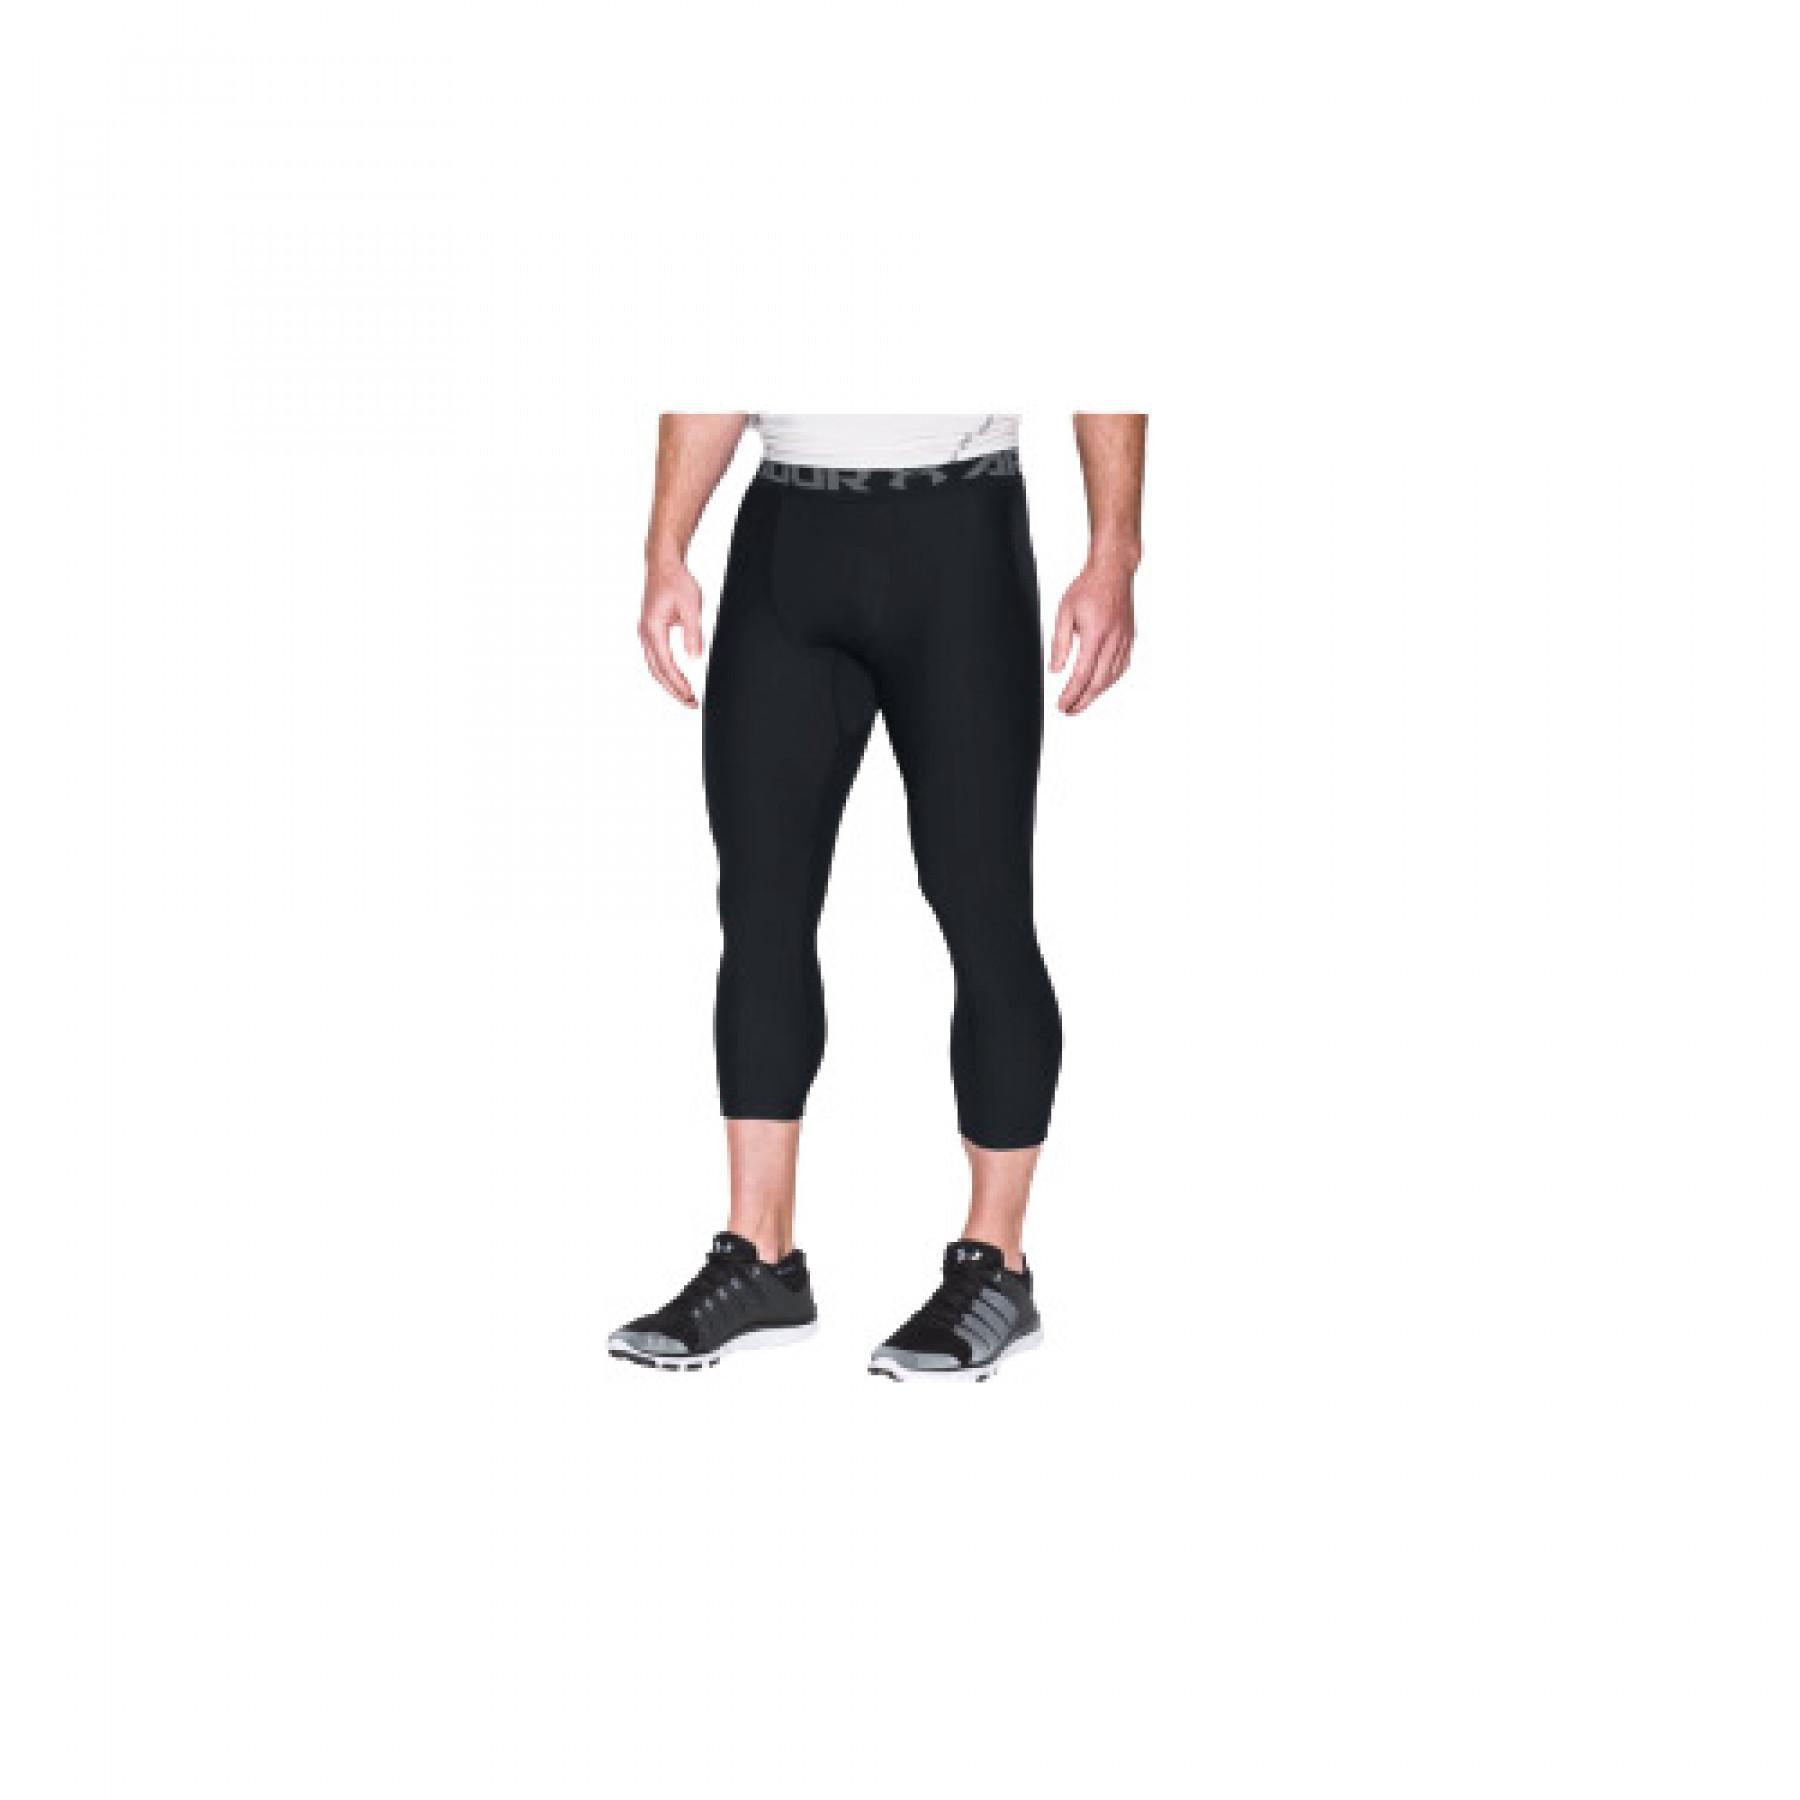 3/4 compression leggings Under Armour HeatGear®